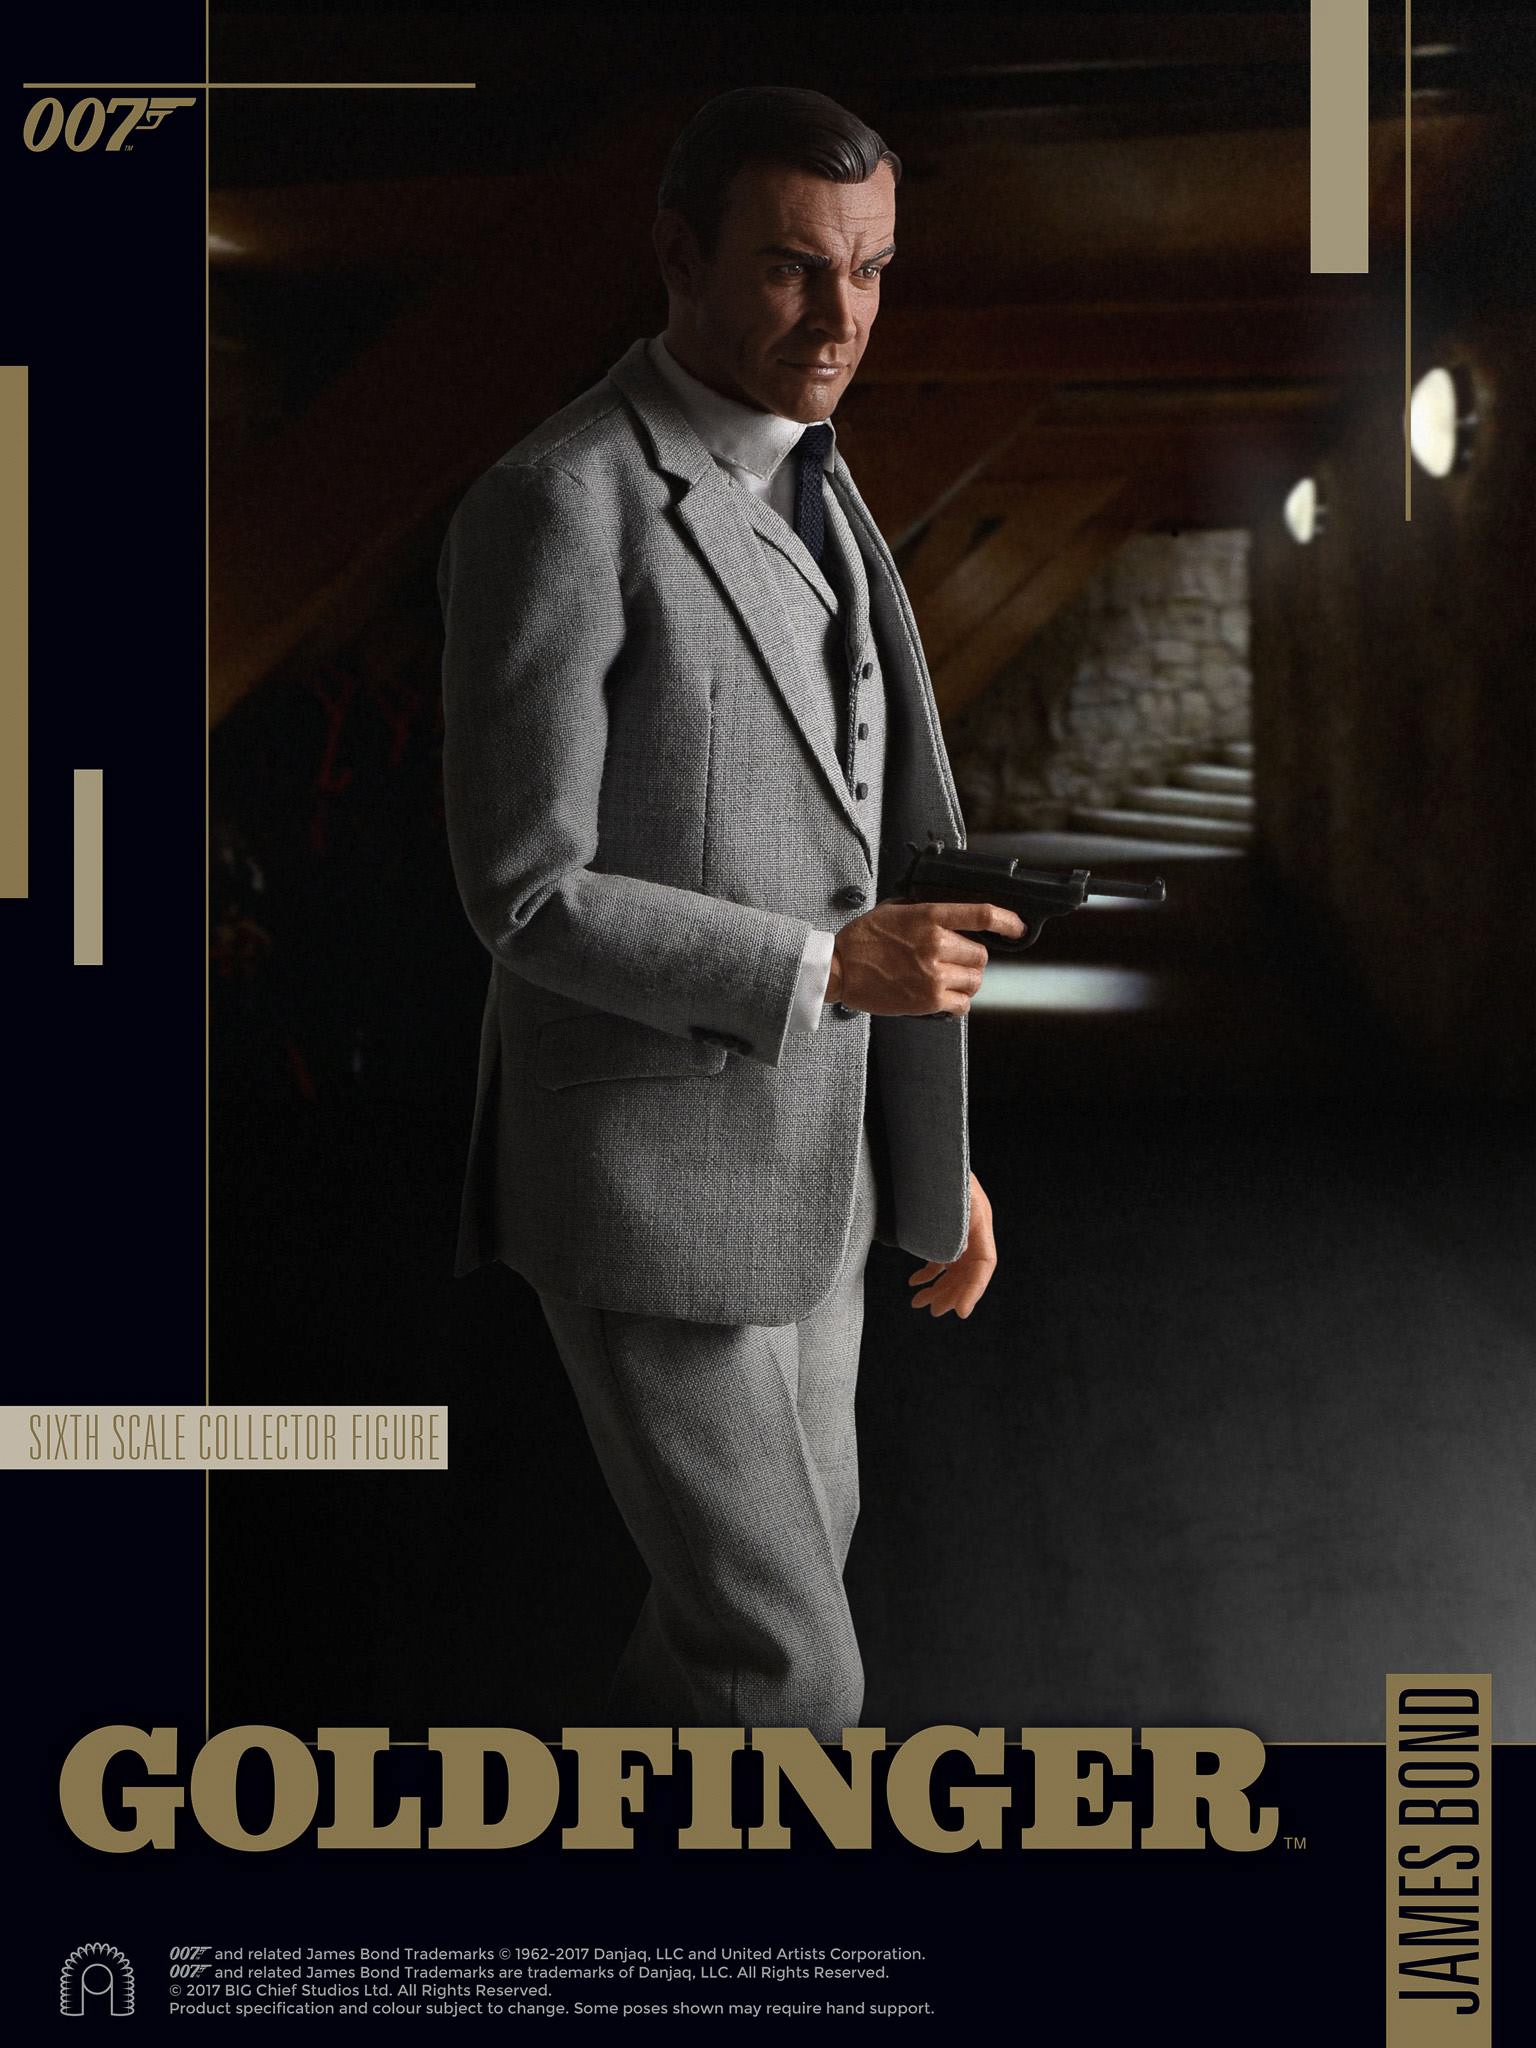 Big-Chief-James-Bond-Goldfinger-Oddjob-Full-Reveal-007.jpg